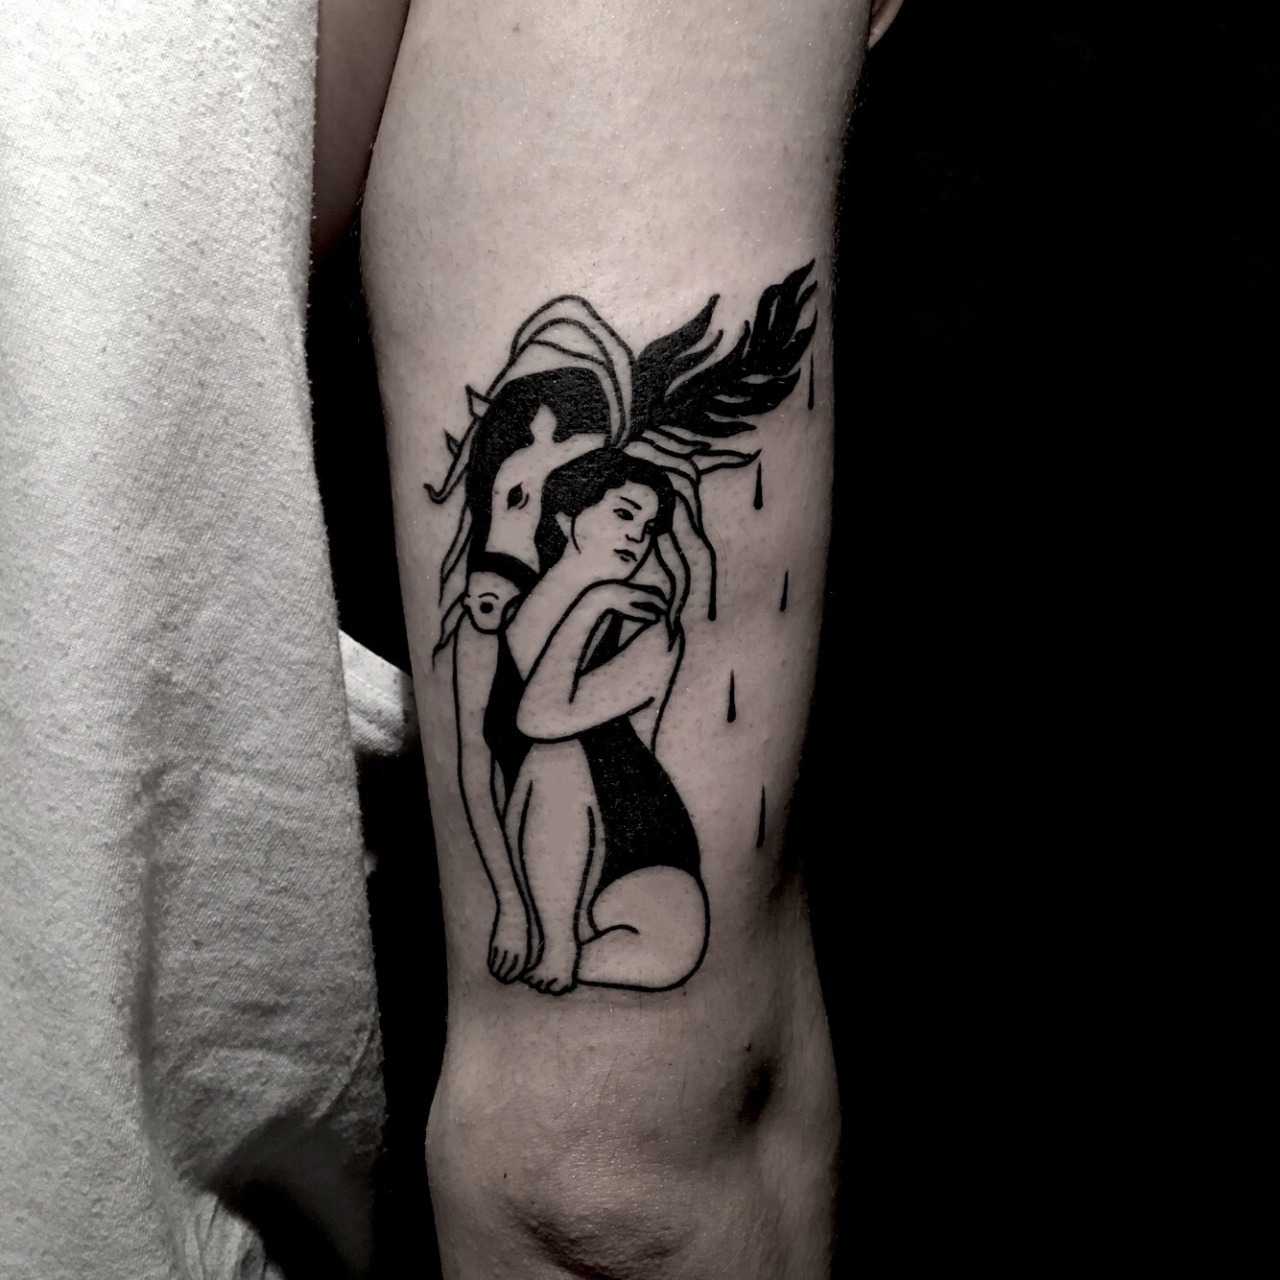 Girl and horse tattoo by Berkin Donmezz